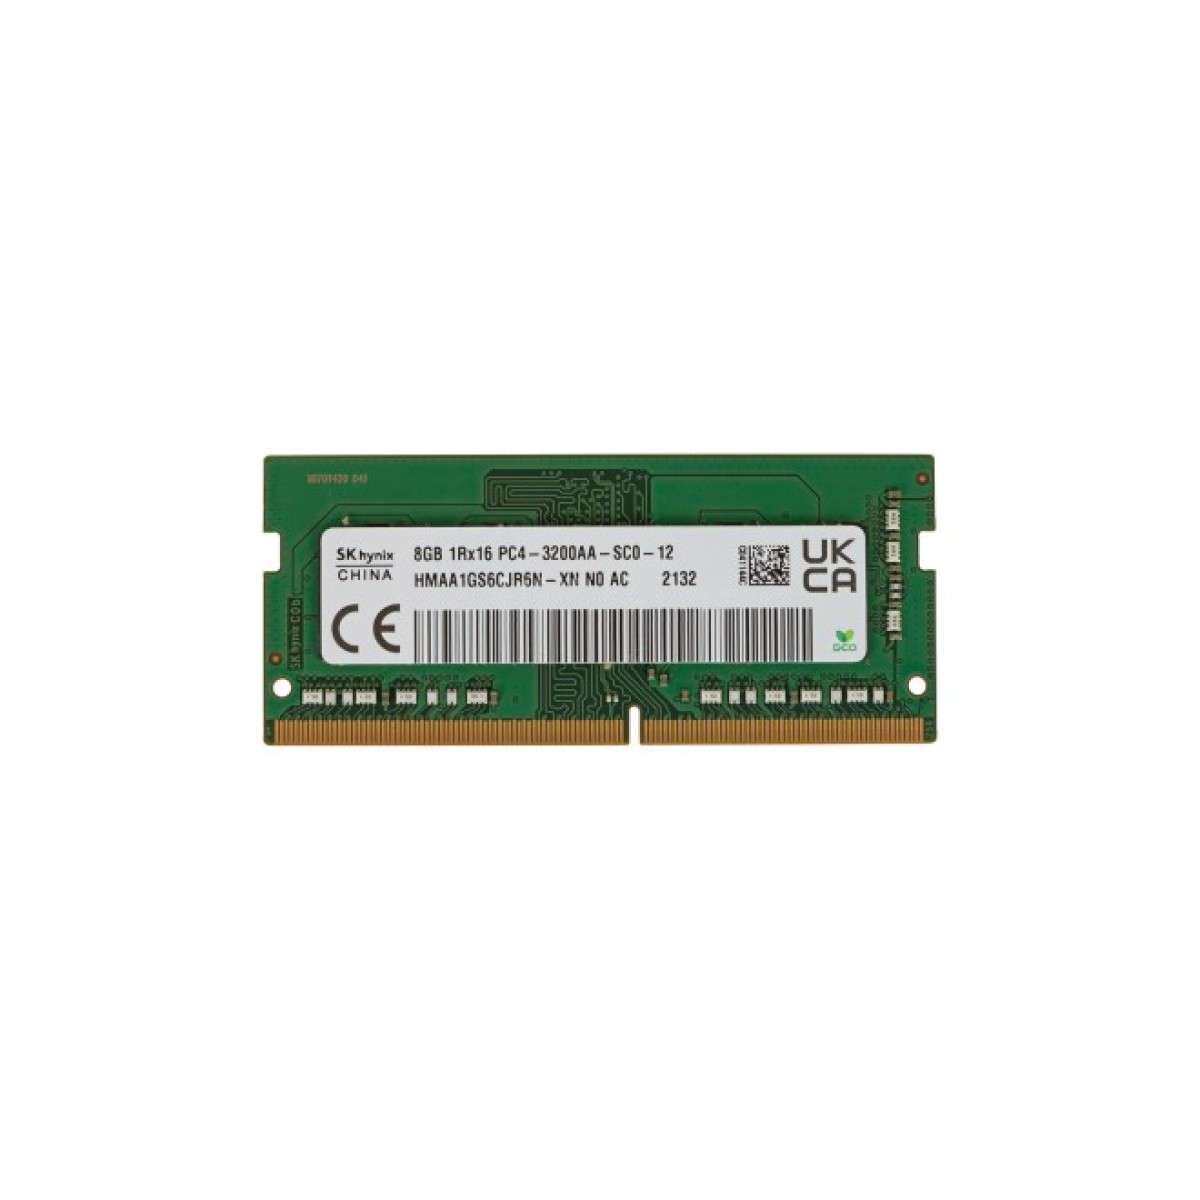 Модуль памяти для ноутбука SoDIMM DDR4 8GB 3200 MHz Hynix (HMAA1GS6CJR6N-XN) 256_256.jpg